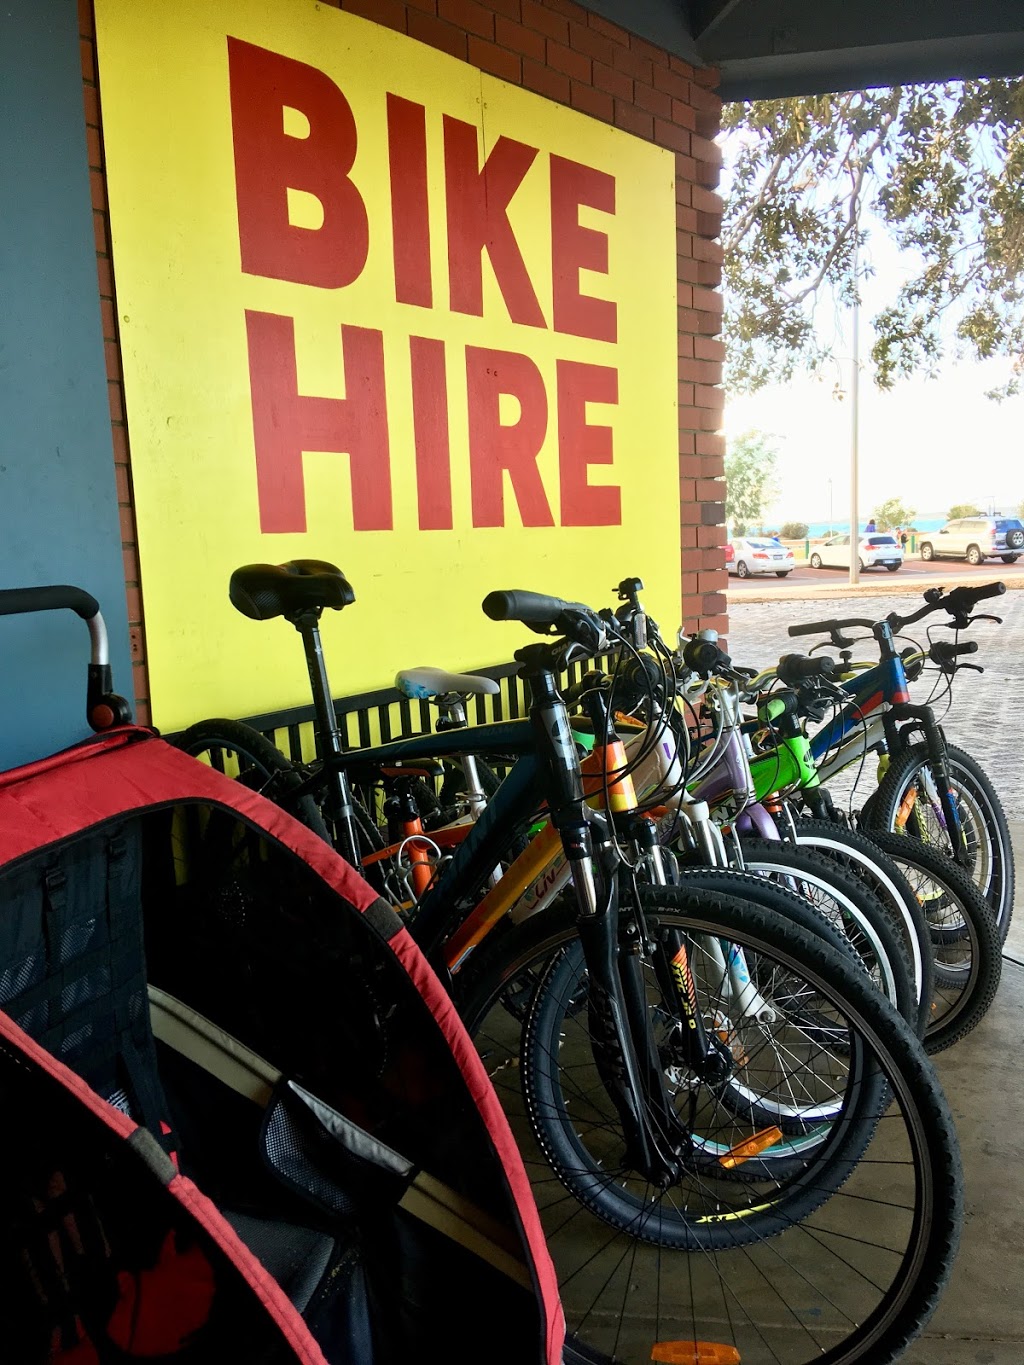 Revolutions Geraldton - Bicycle Sales, Hire & Service | bicycle store | 268 Marine Terrace, Geraldton WA 6530, Australia | 0899641399 OR +61 8 9964 1399